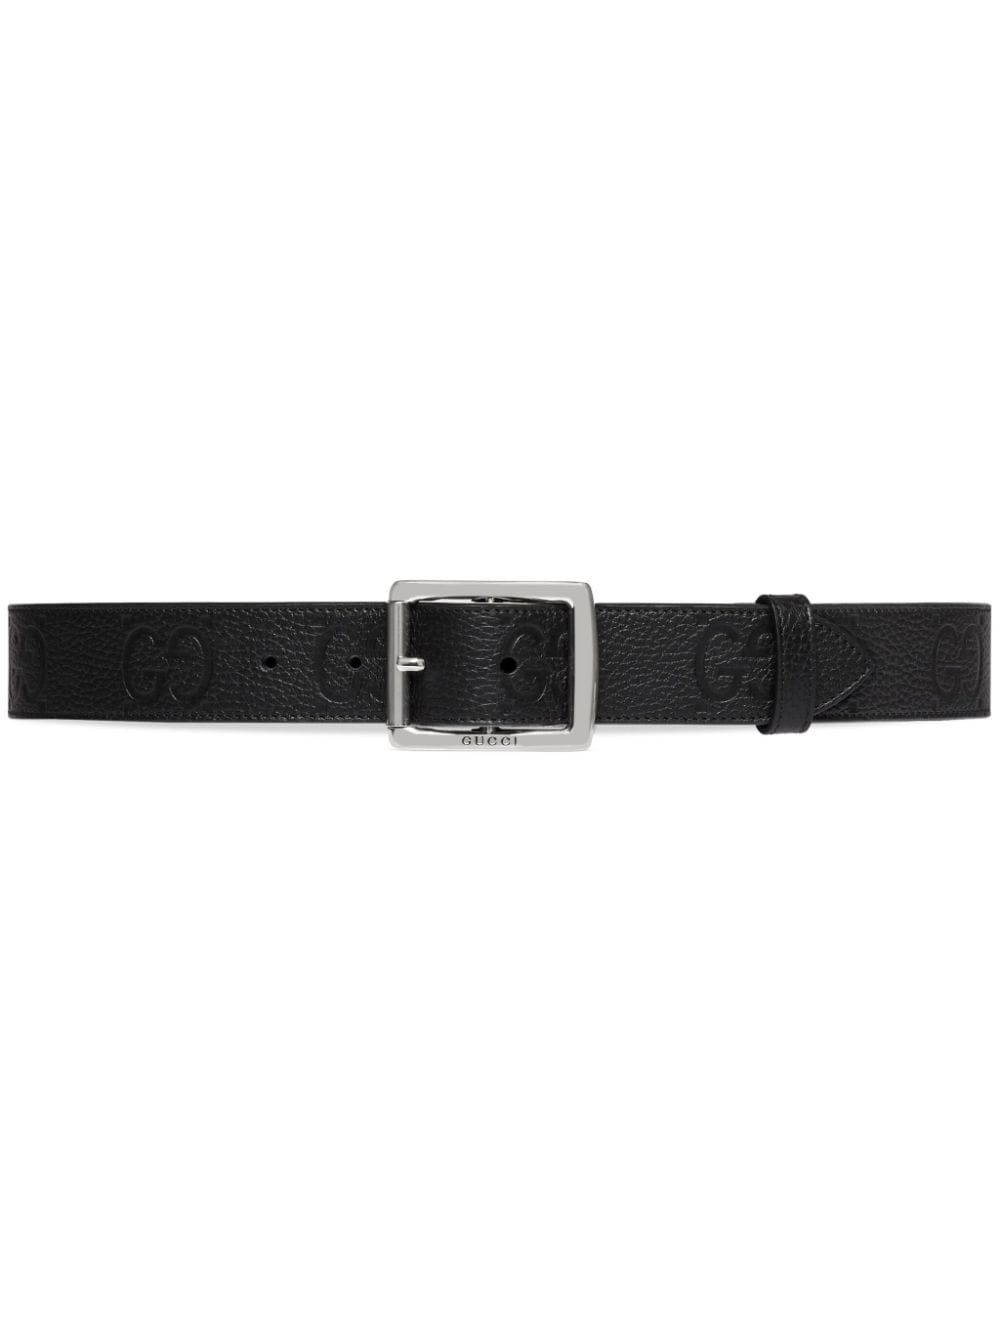 GG logo-debossed leather belt - 1